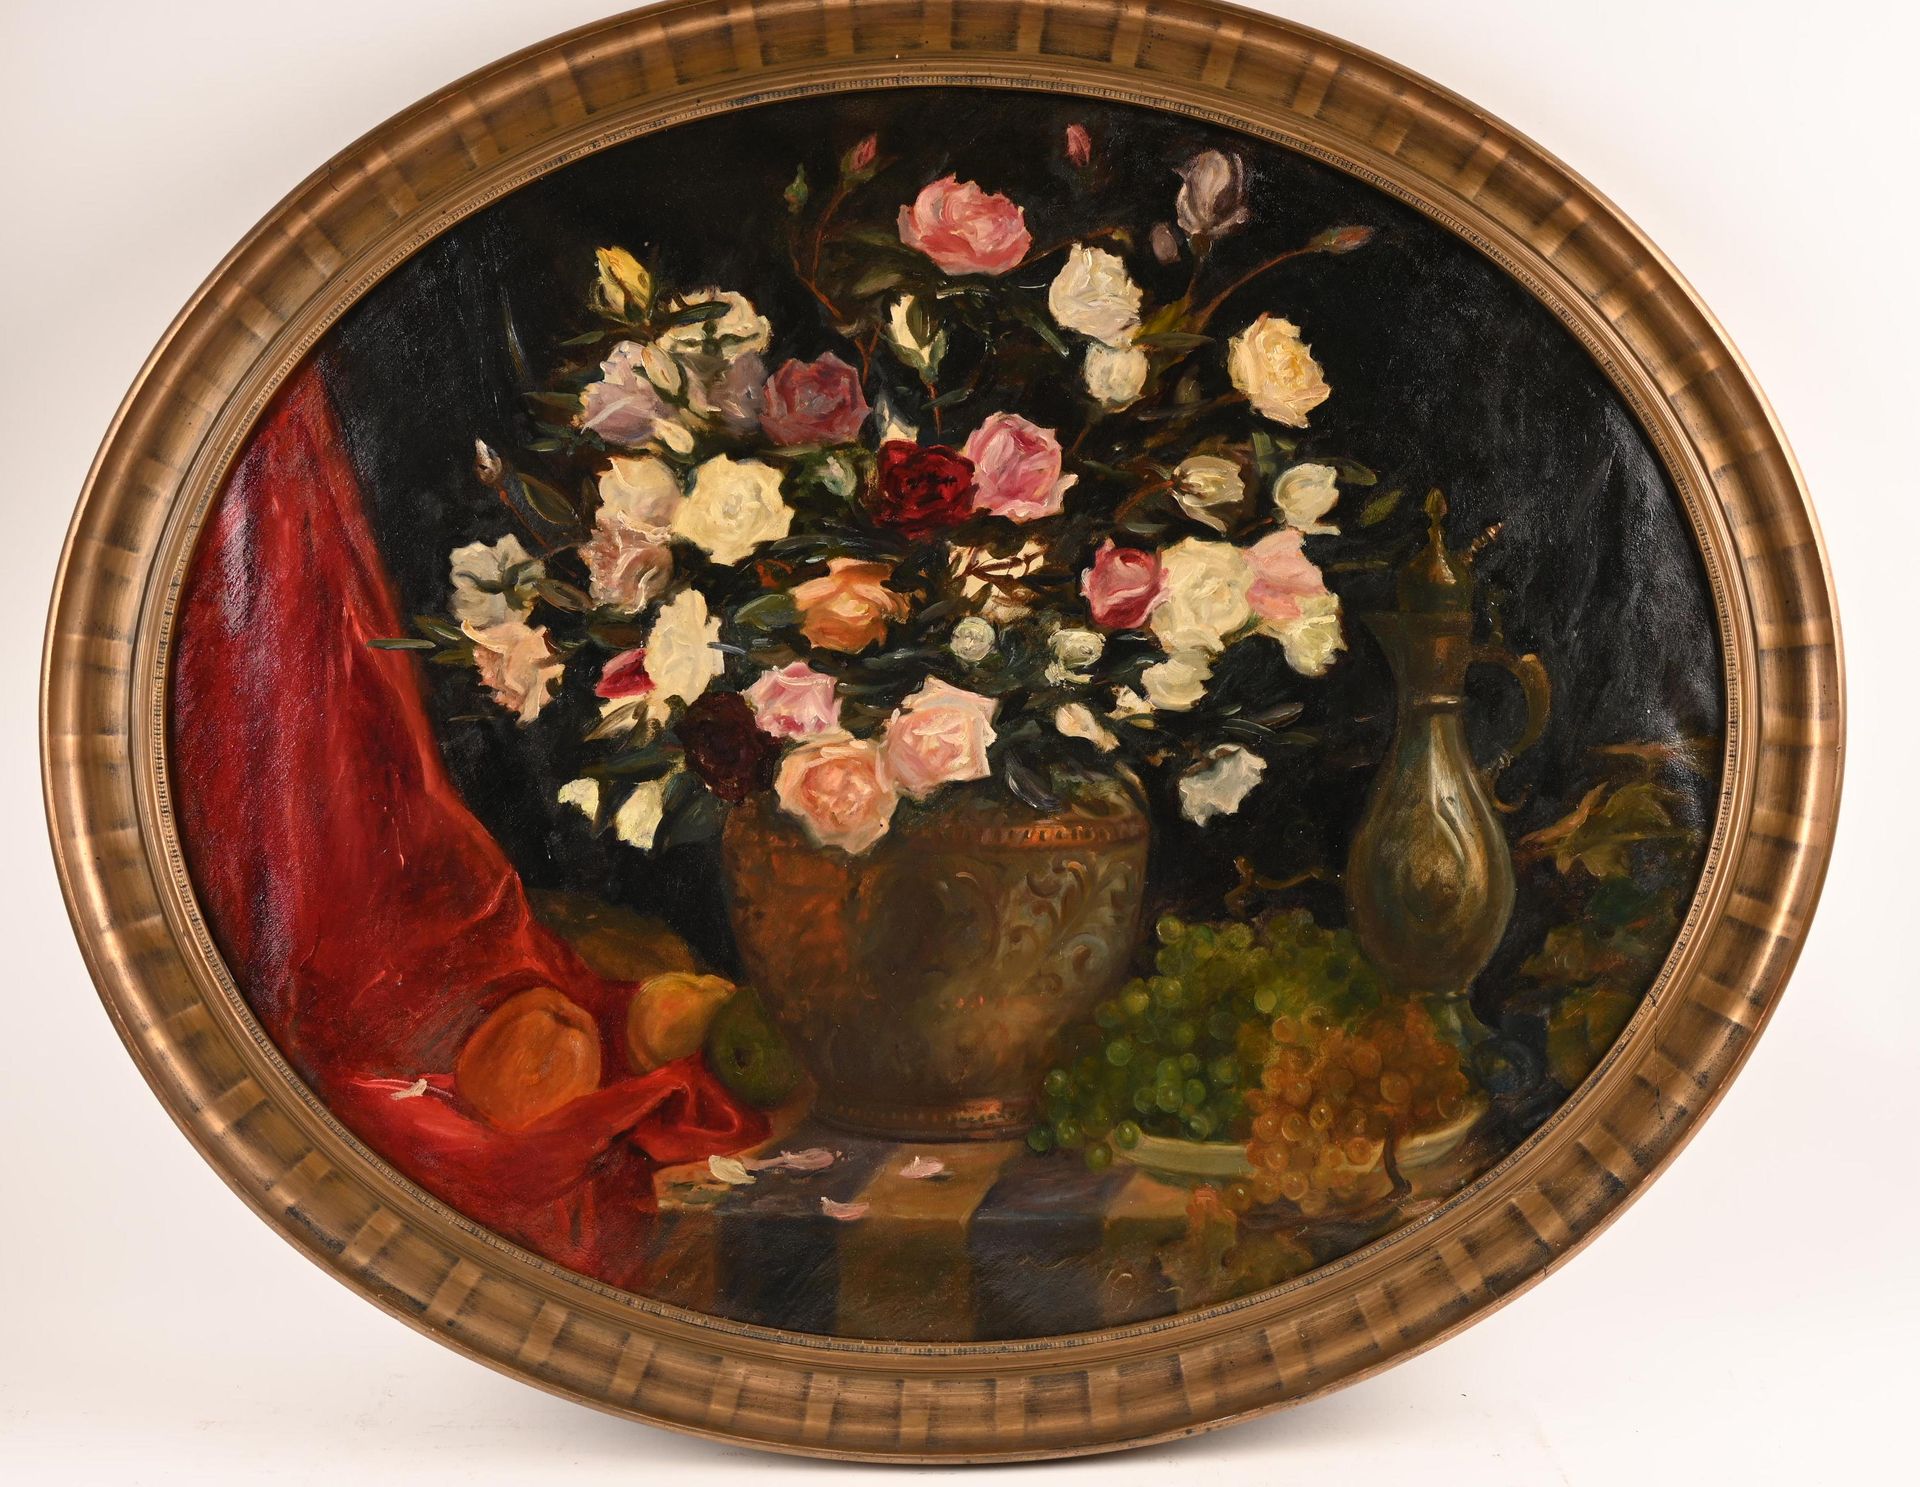 Ecole belge - Bouquet 19世纪末20世纪初的比利时画派，"花束静物"，布面油画，漂亮的椭圆形画框，尺寸：96 x 117厘米